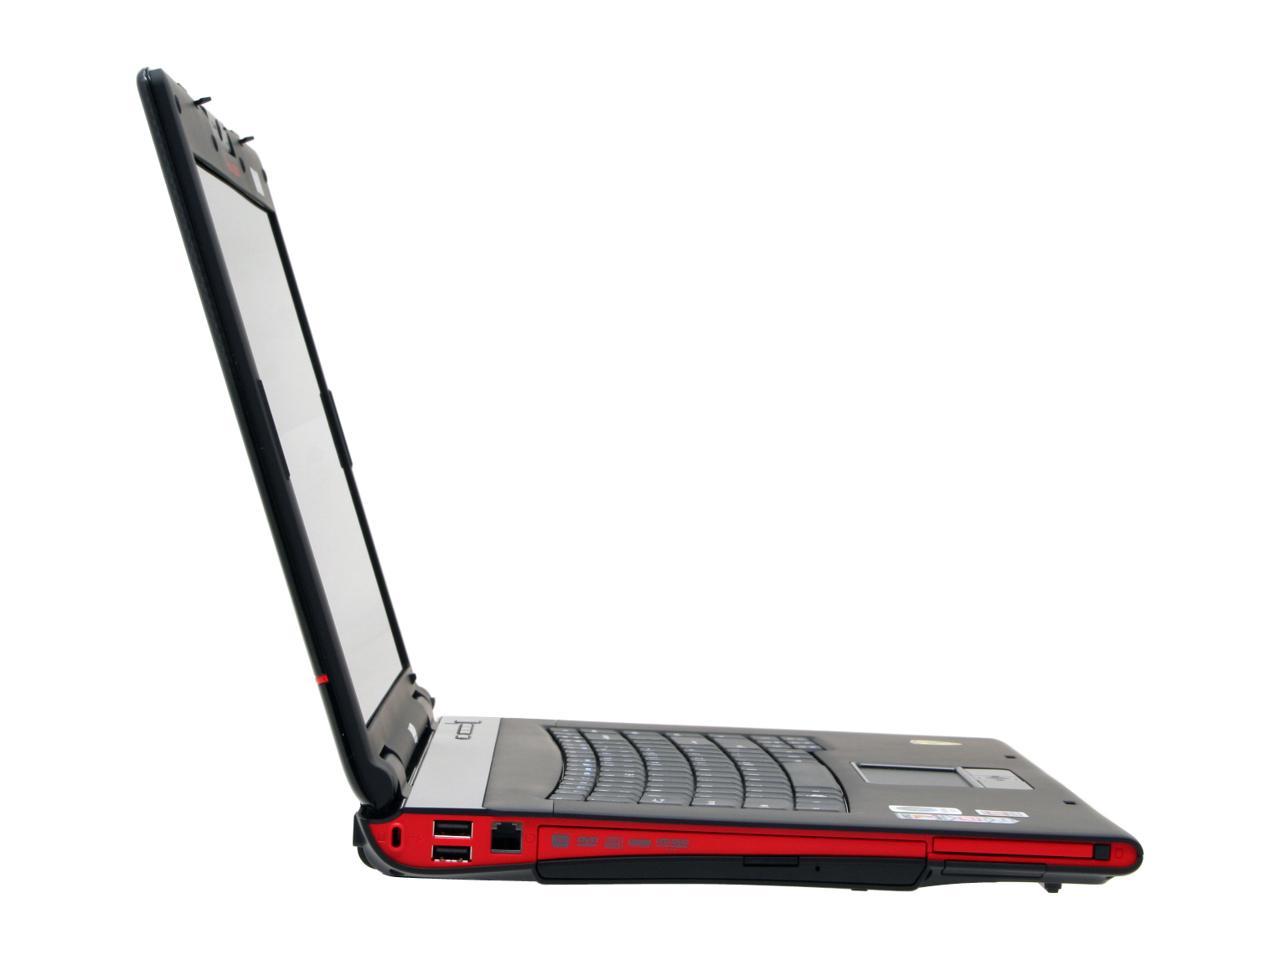 Acer Laptop Ferrari AMD Turion 64 X2 TL-60 (2.00GHz) 2GB Memory 